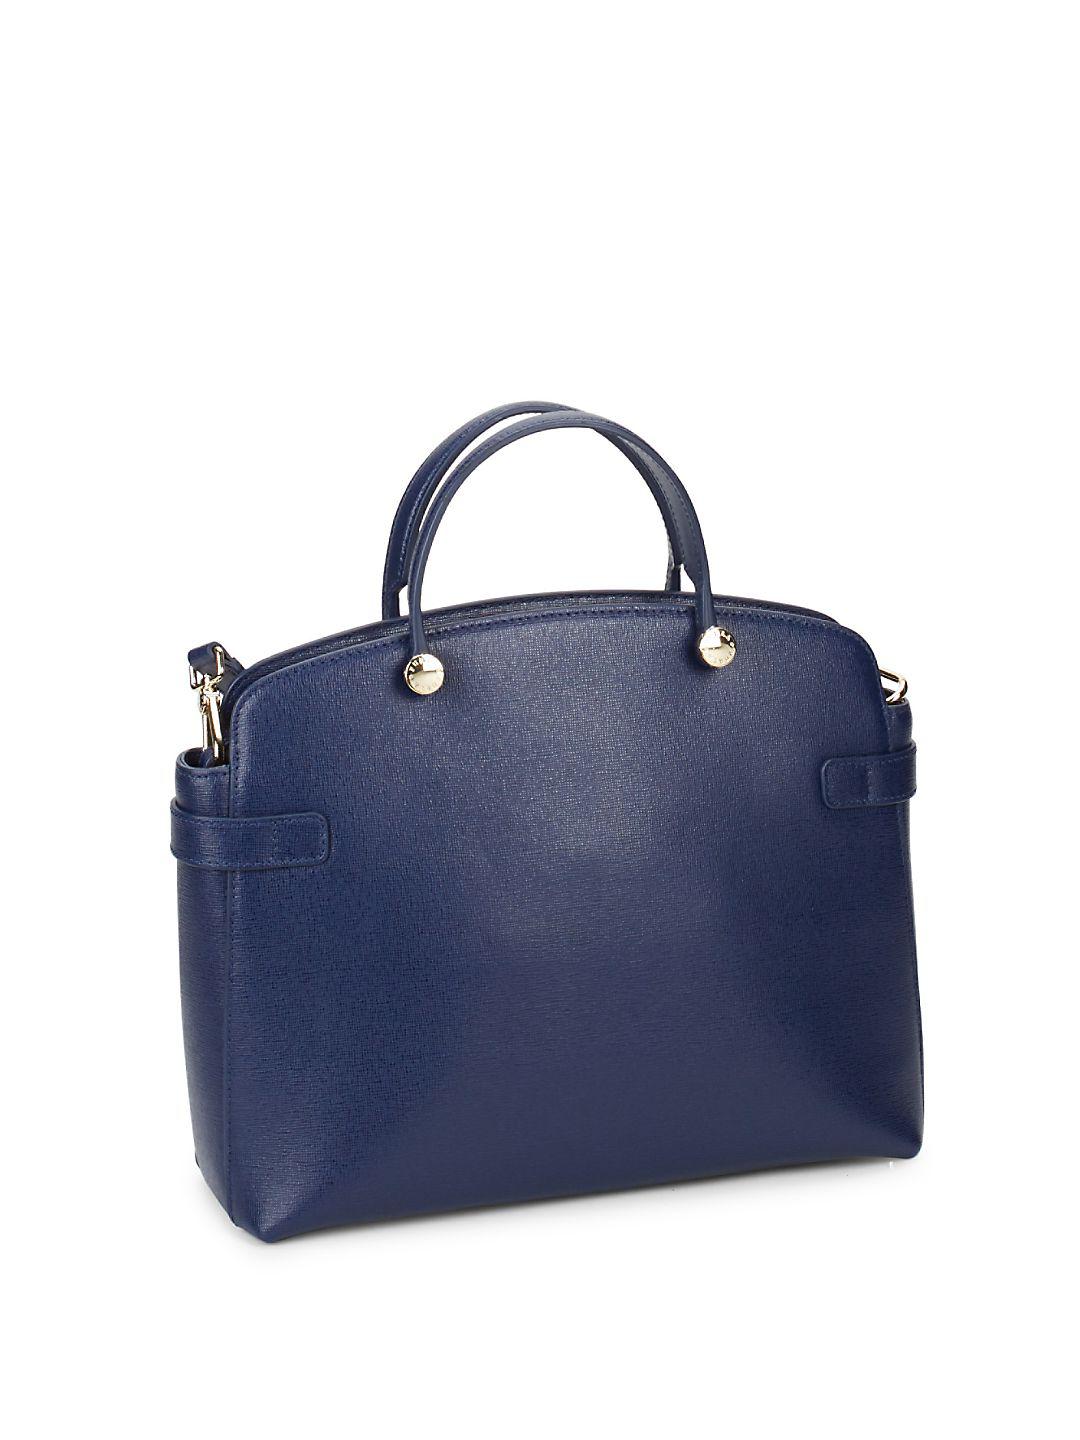 Furla Agata Leather Tote Bag in Blue